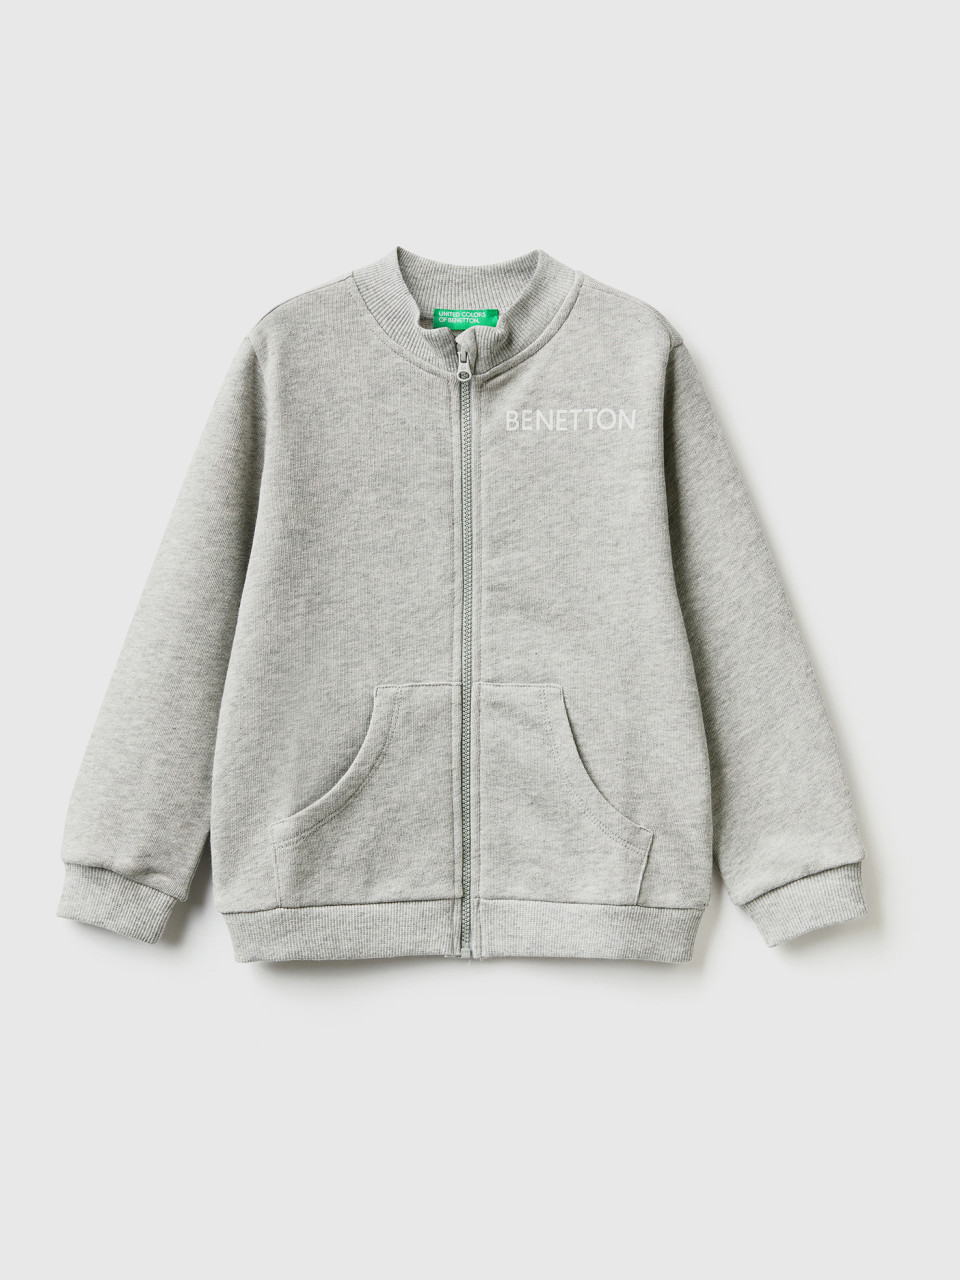 Benetton, Sweatshirt With Zip In Organic Cotton, Light Gray, Kids